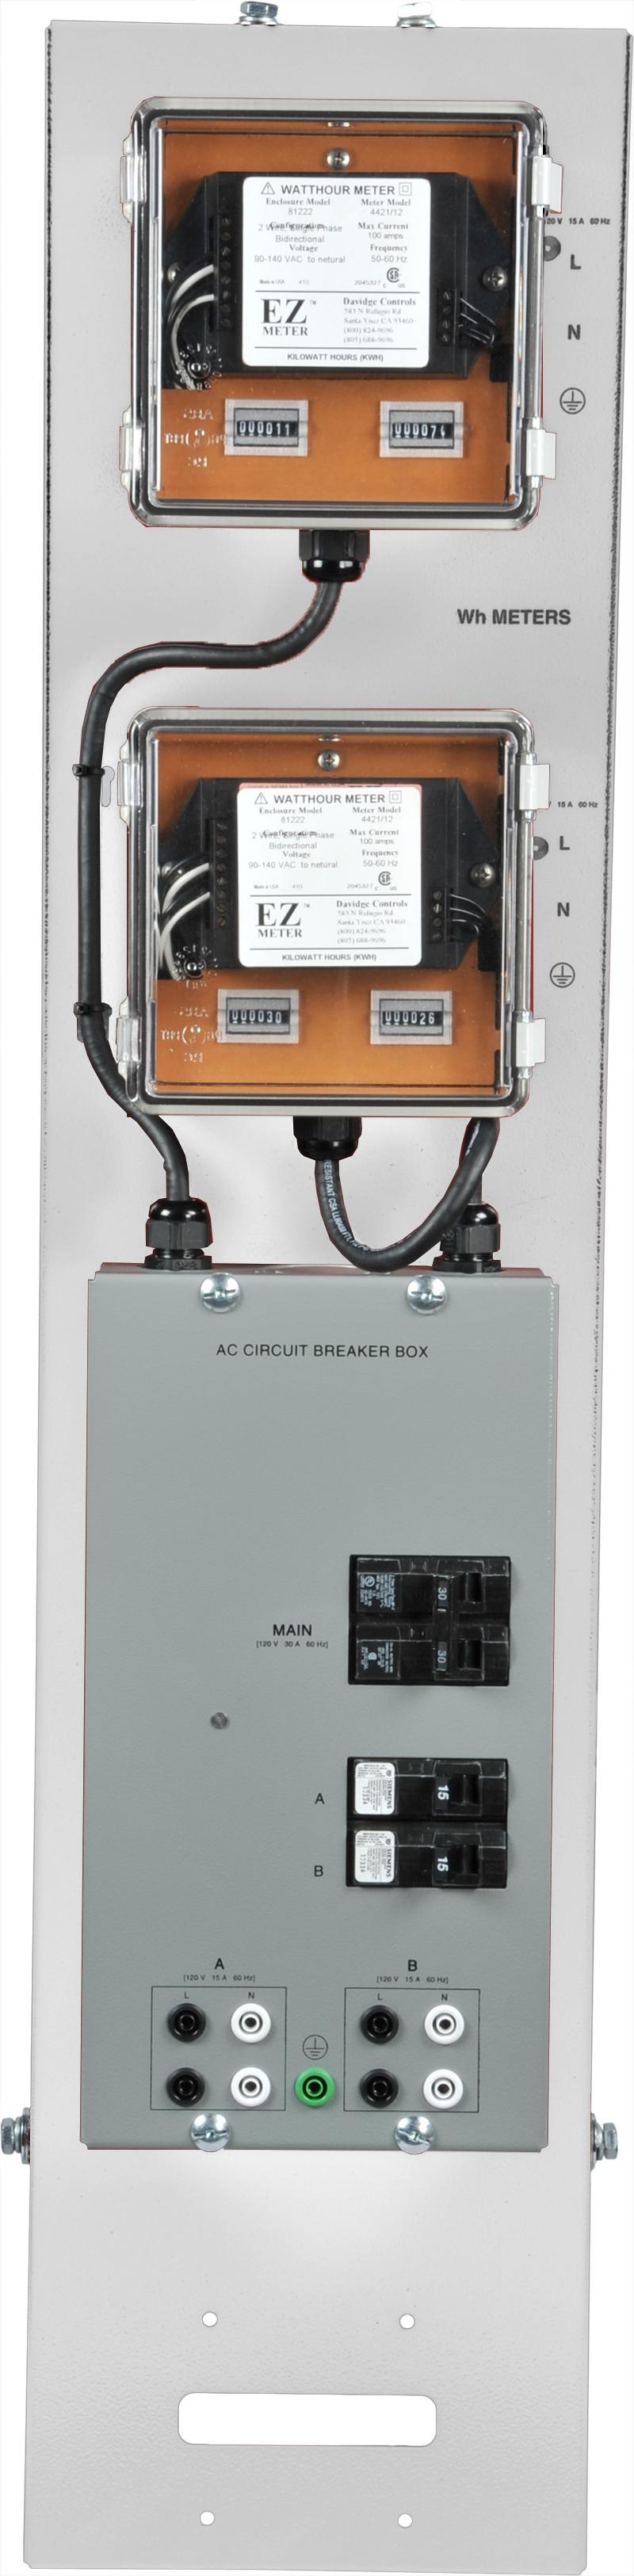 kwh Meters with AC Circuit Breaker Box (UL/CSA Certified) 66059-A0 The kwh Meters with AC Circuit Breaker Box (UL/CSA Certified) consists of two kwh meters and a circuit-breaker box.